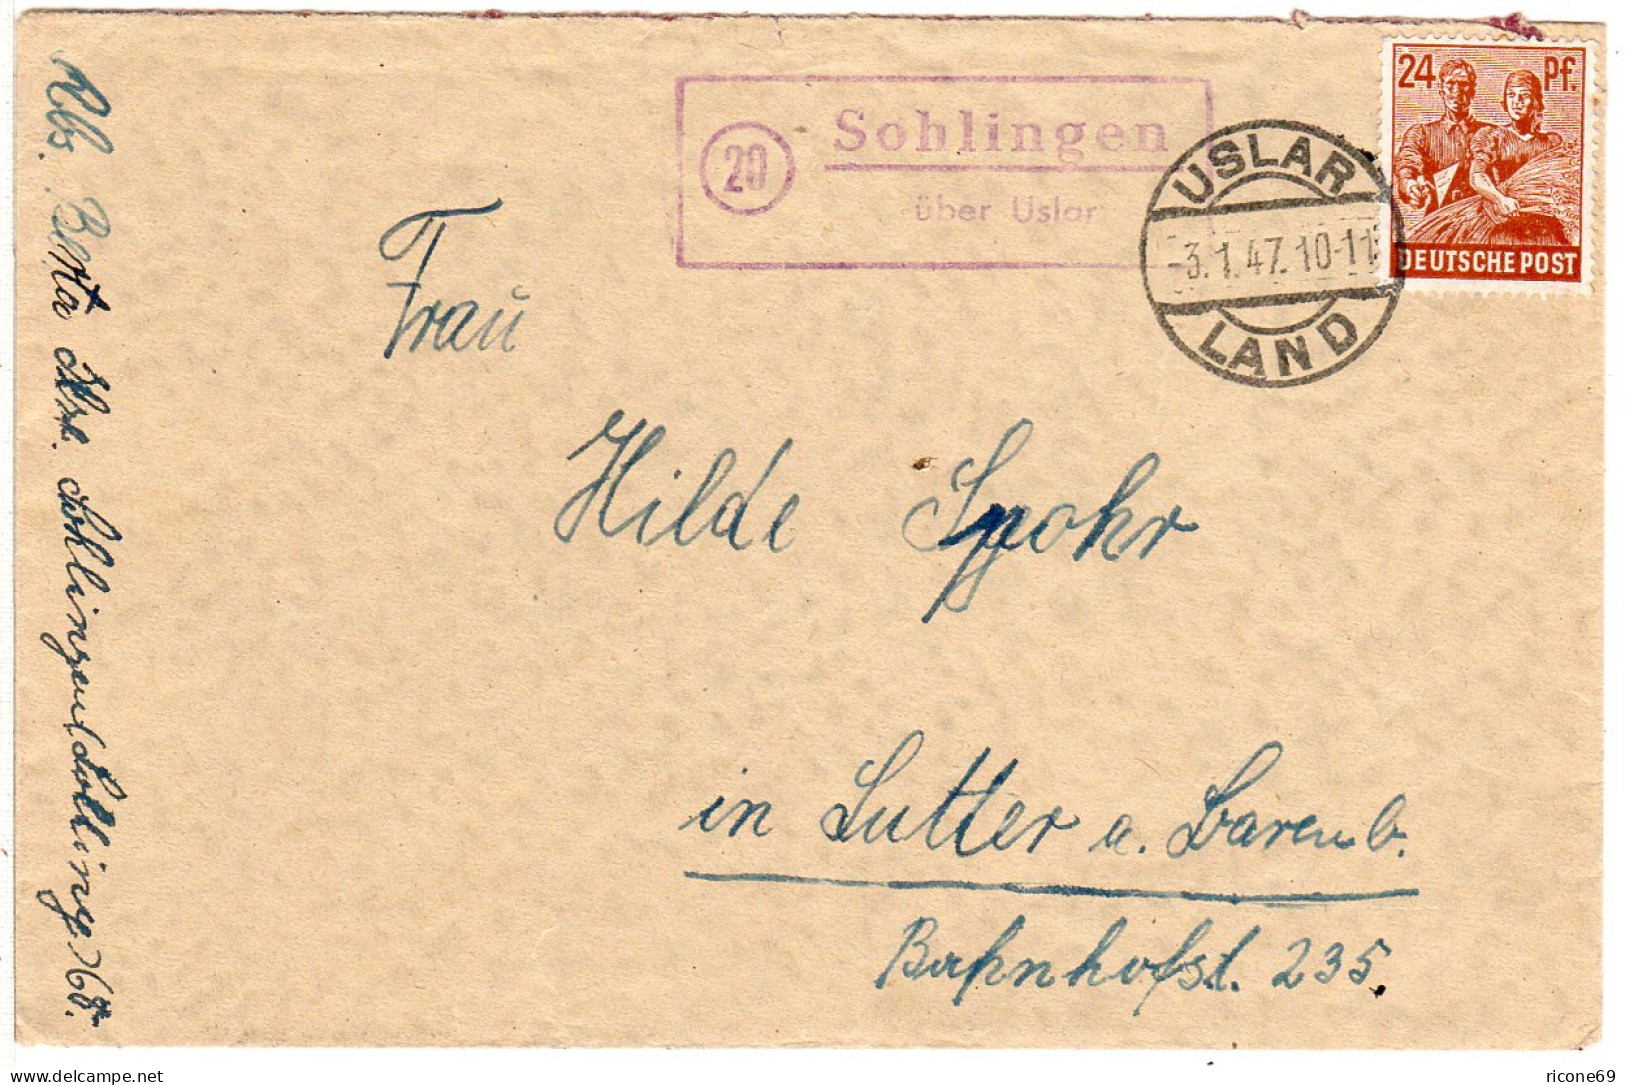 1947, Landpost Stpl. 20 SOHLINGEN über Uslar Auf Brief M. 24 Pf.  - Covers & Documents